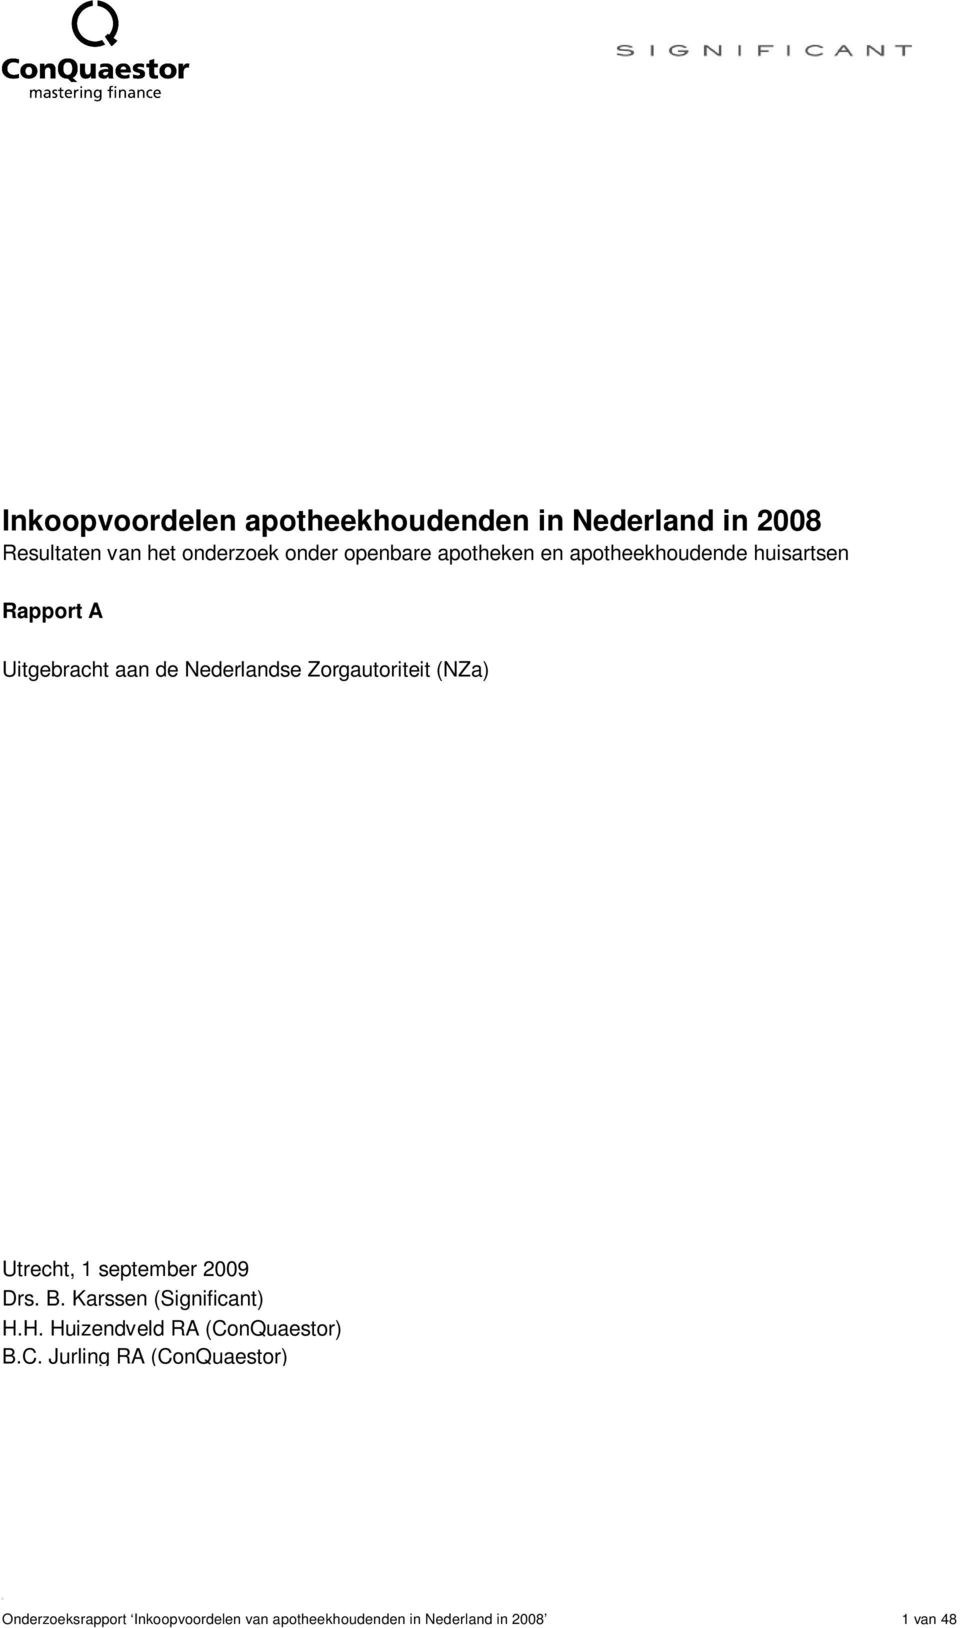 Utrecht, 1 september 2009 Drs. B. Karssen (Significant) H.H. Huizendveld RA (Co